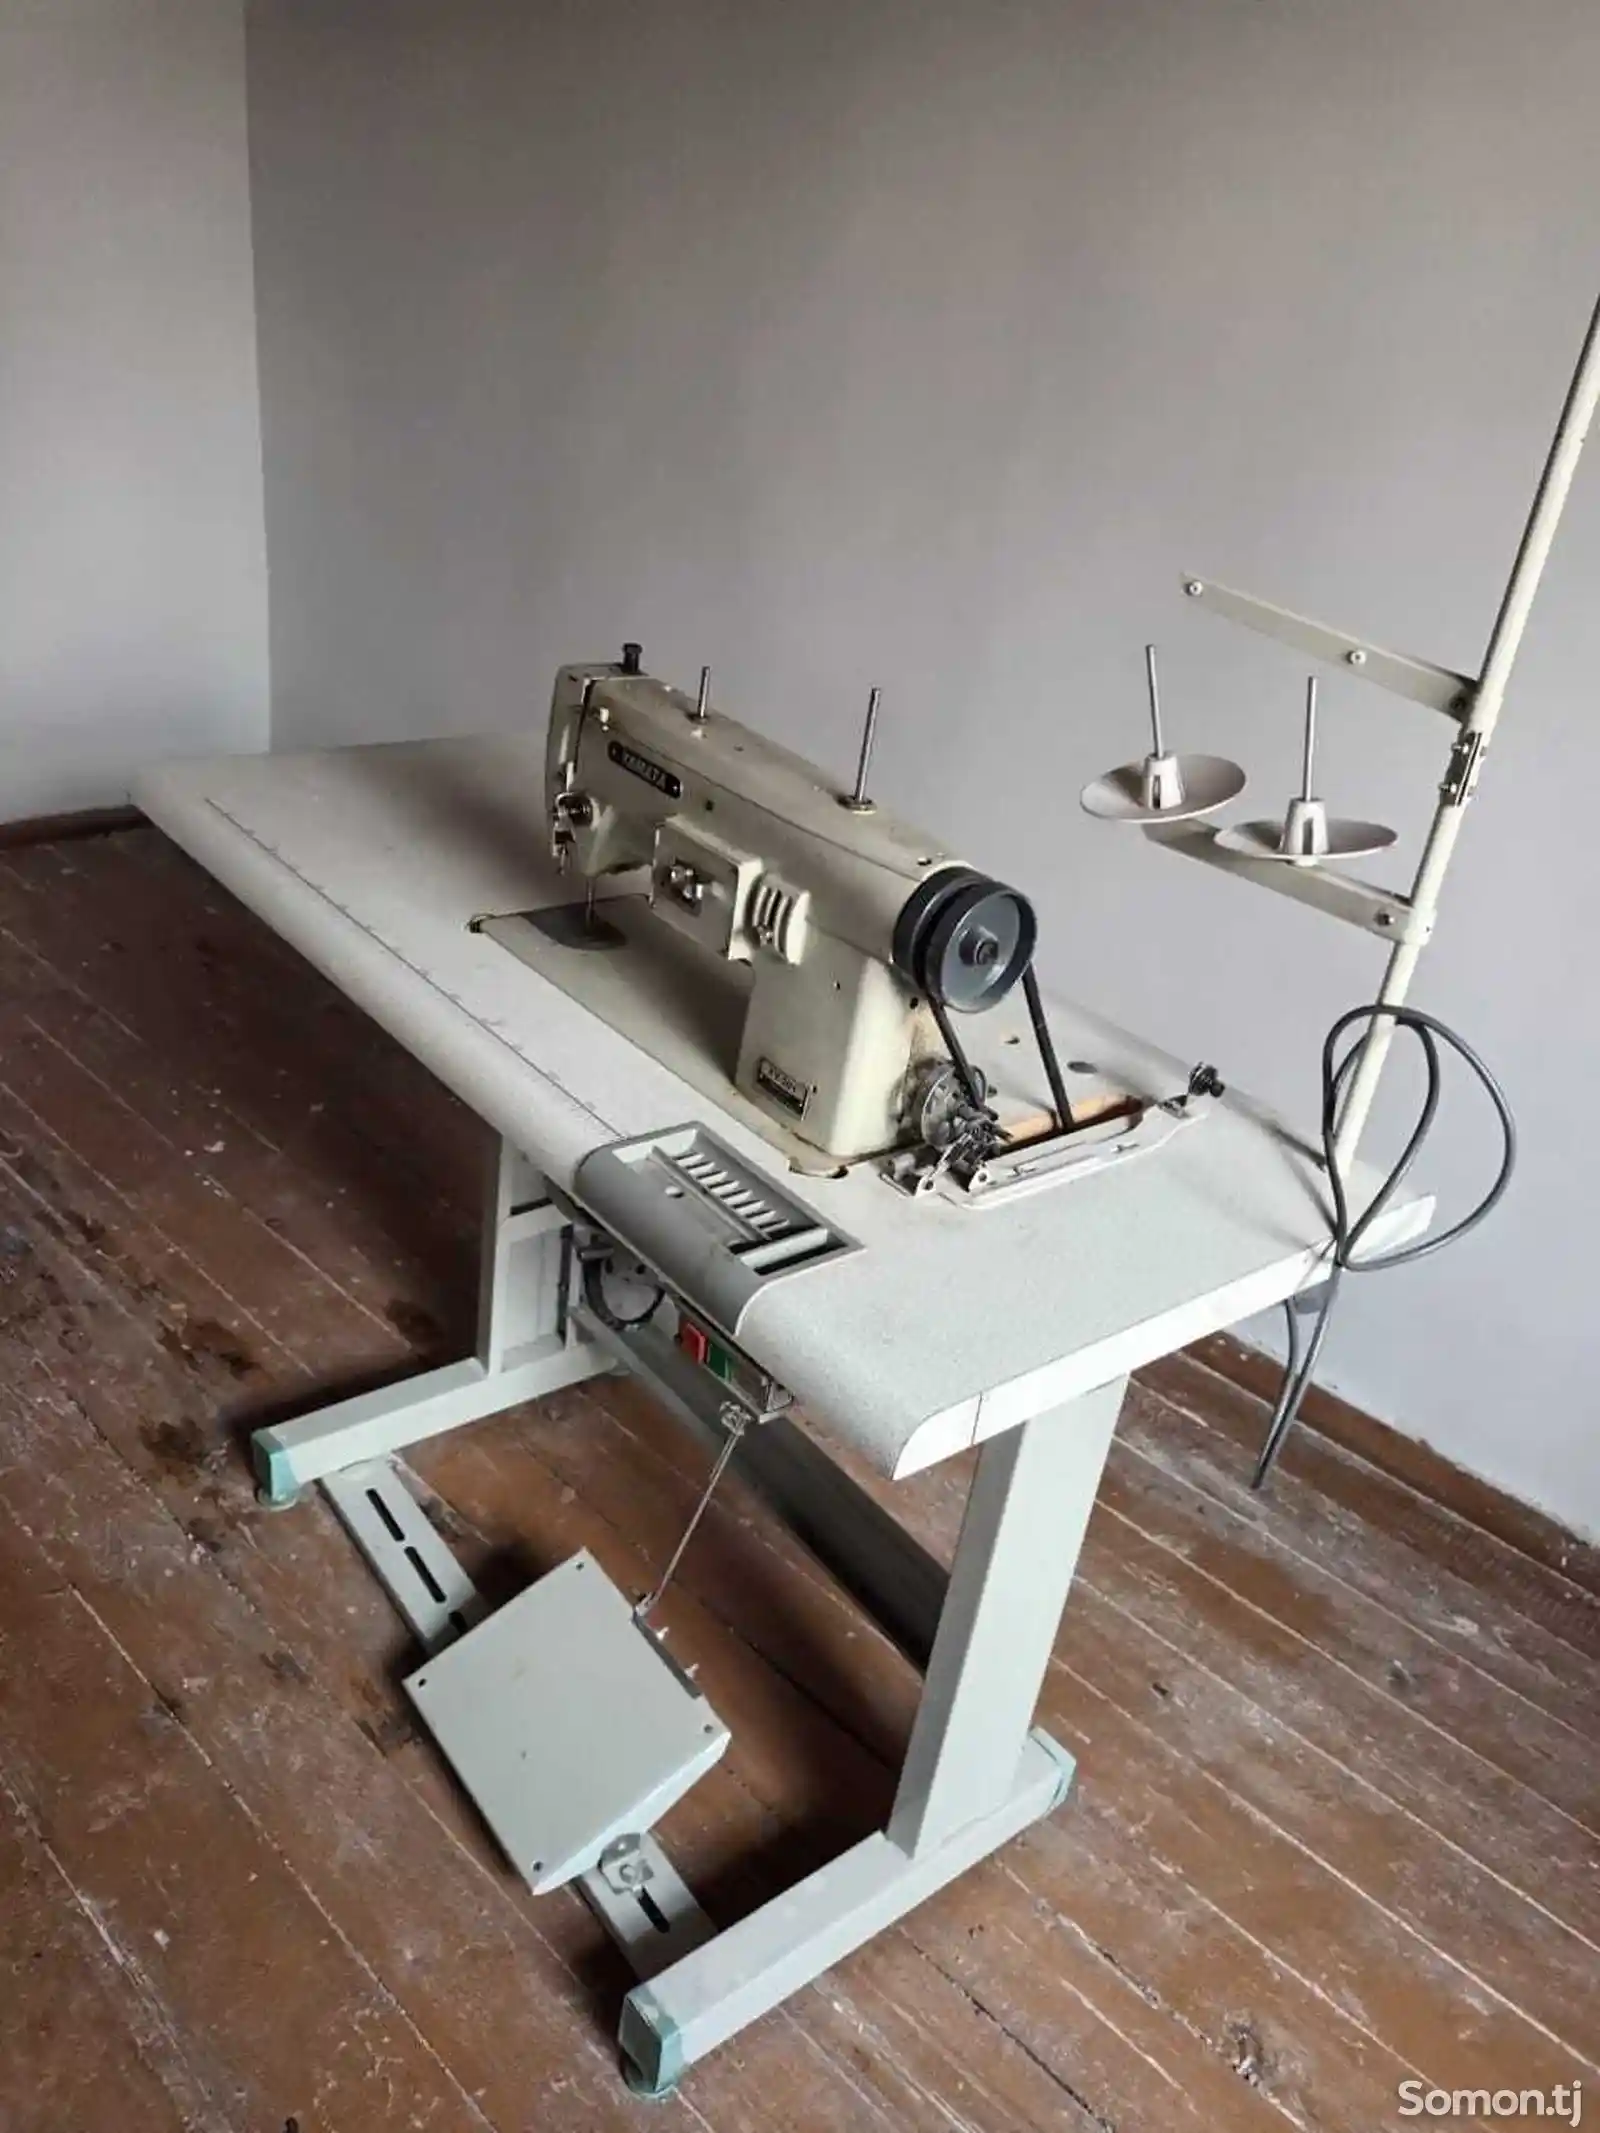 Швейная машина Yamata-3